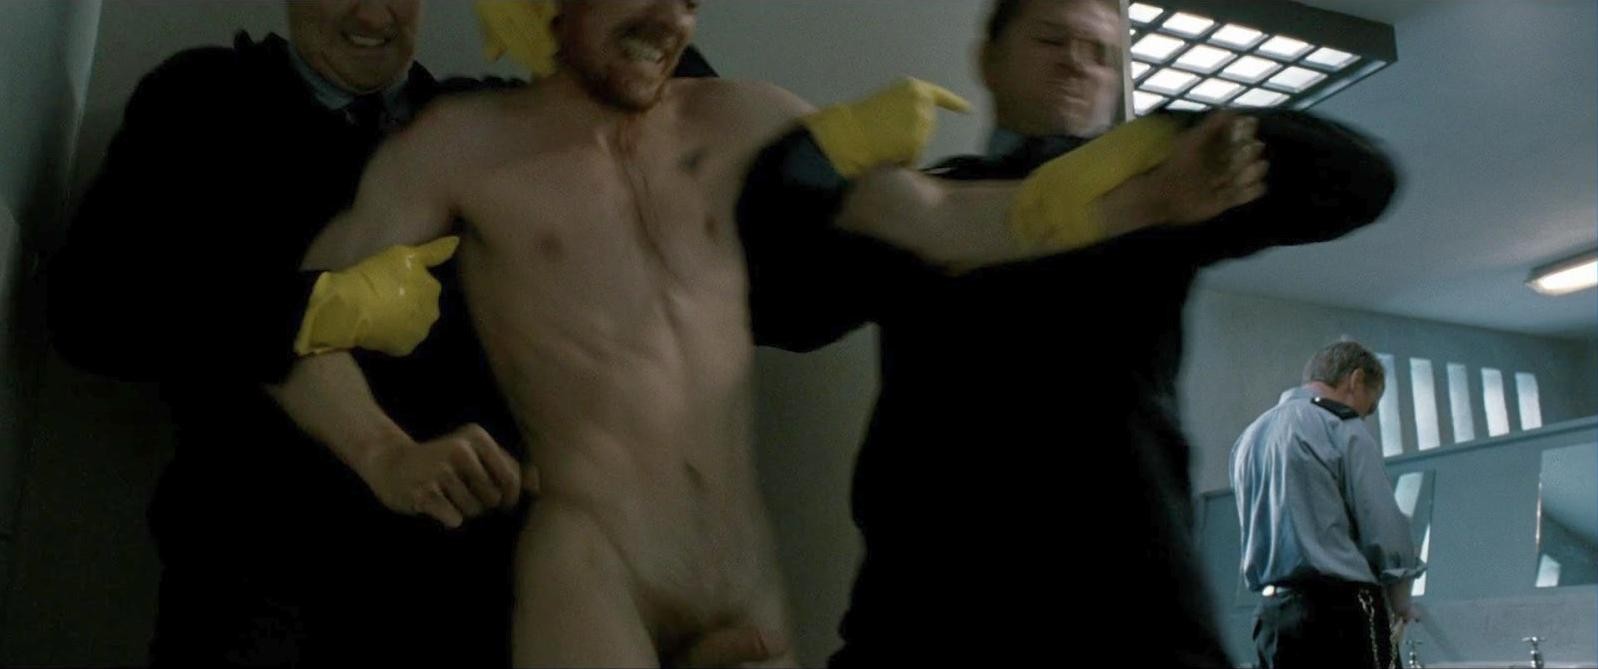 Michael Fassbender nudo in "Hunger" (2008) .